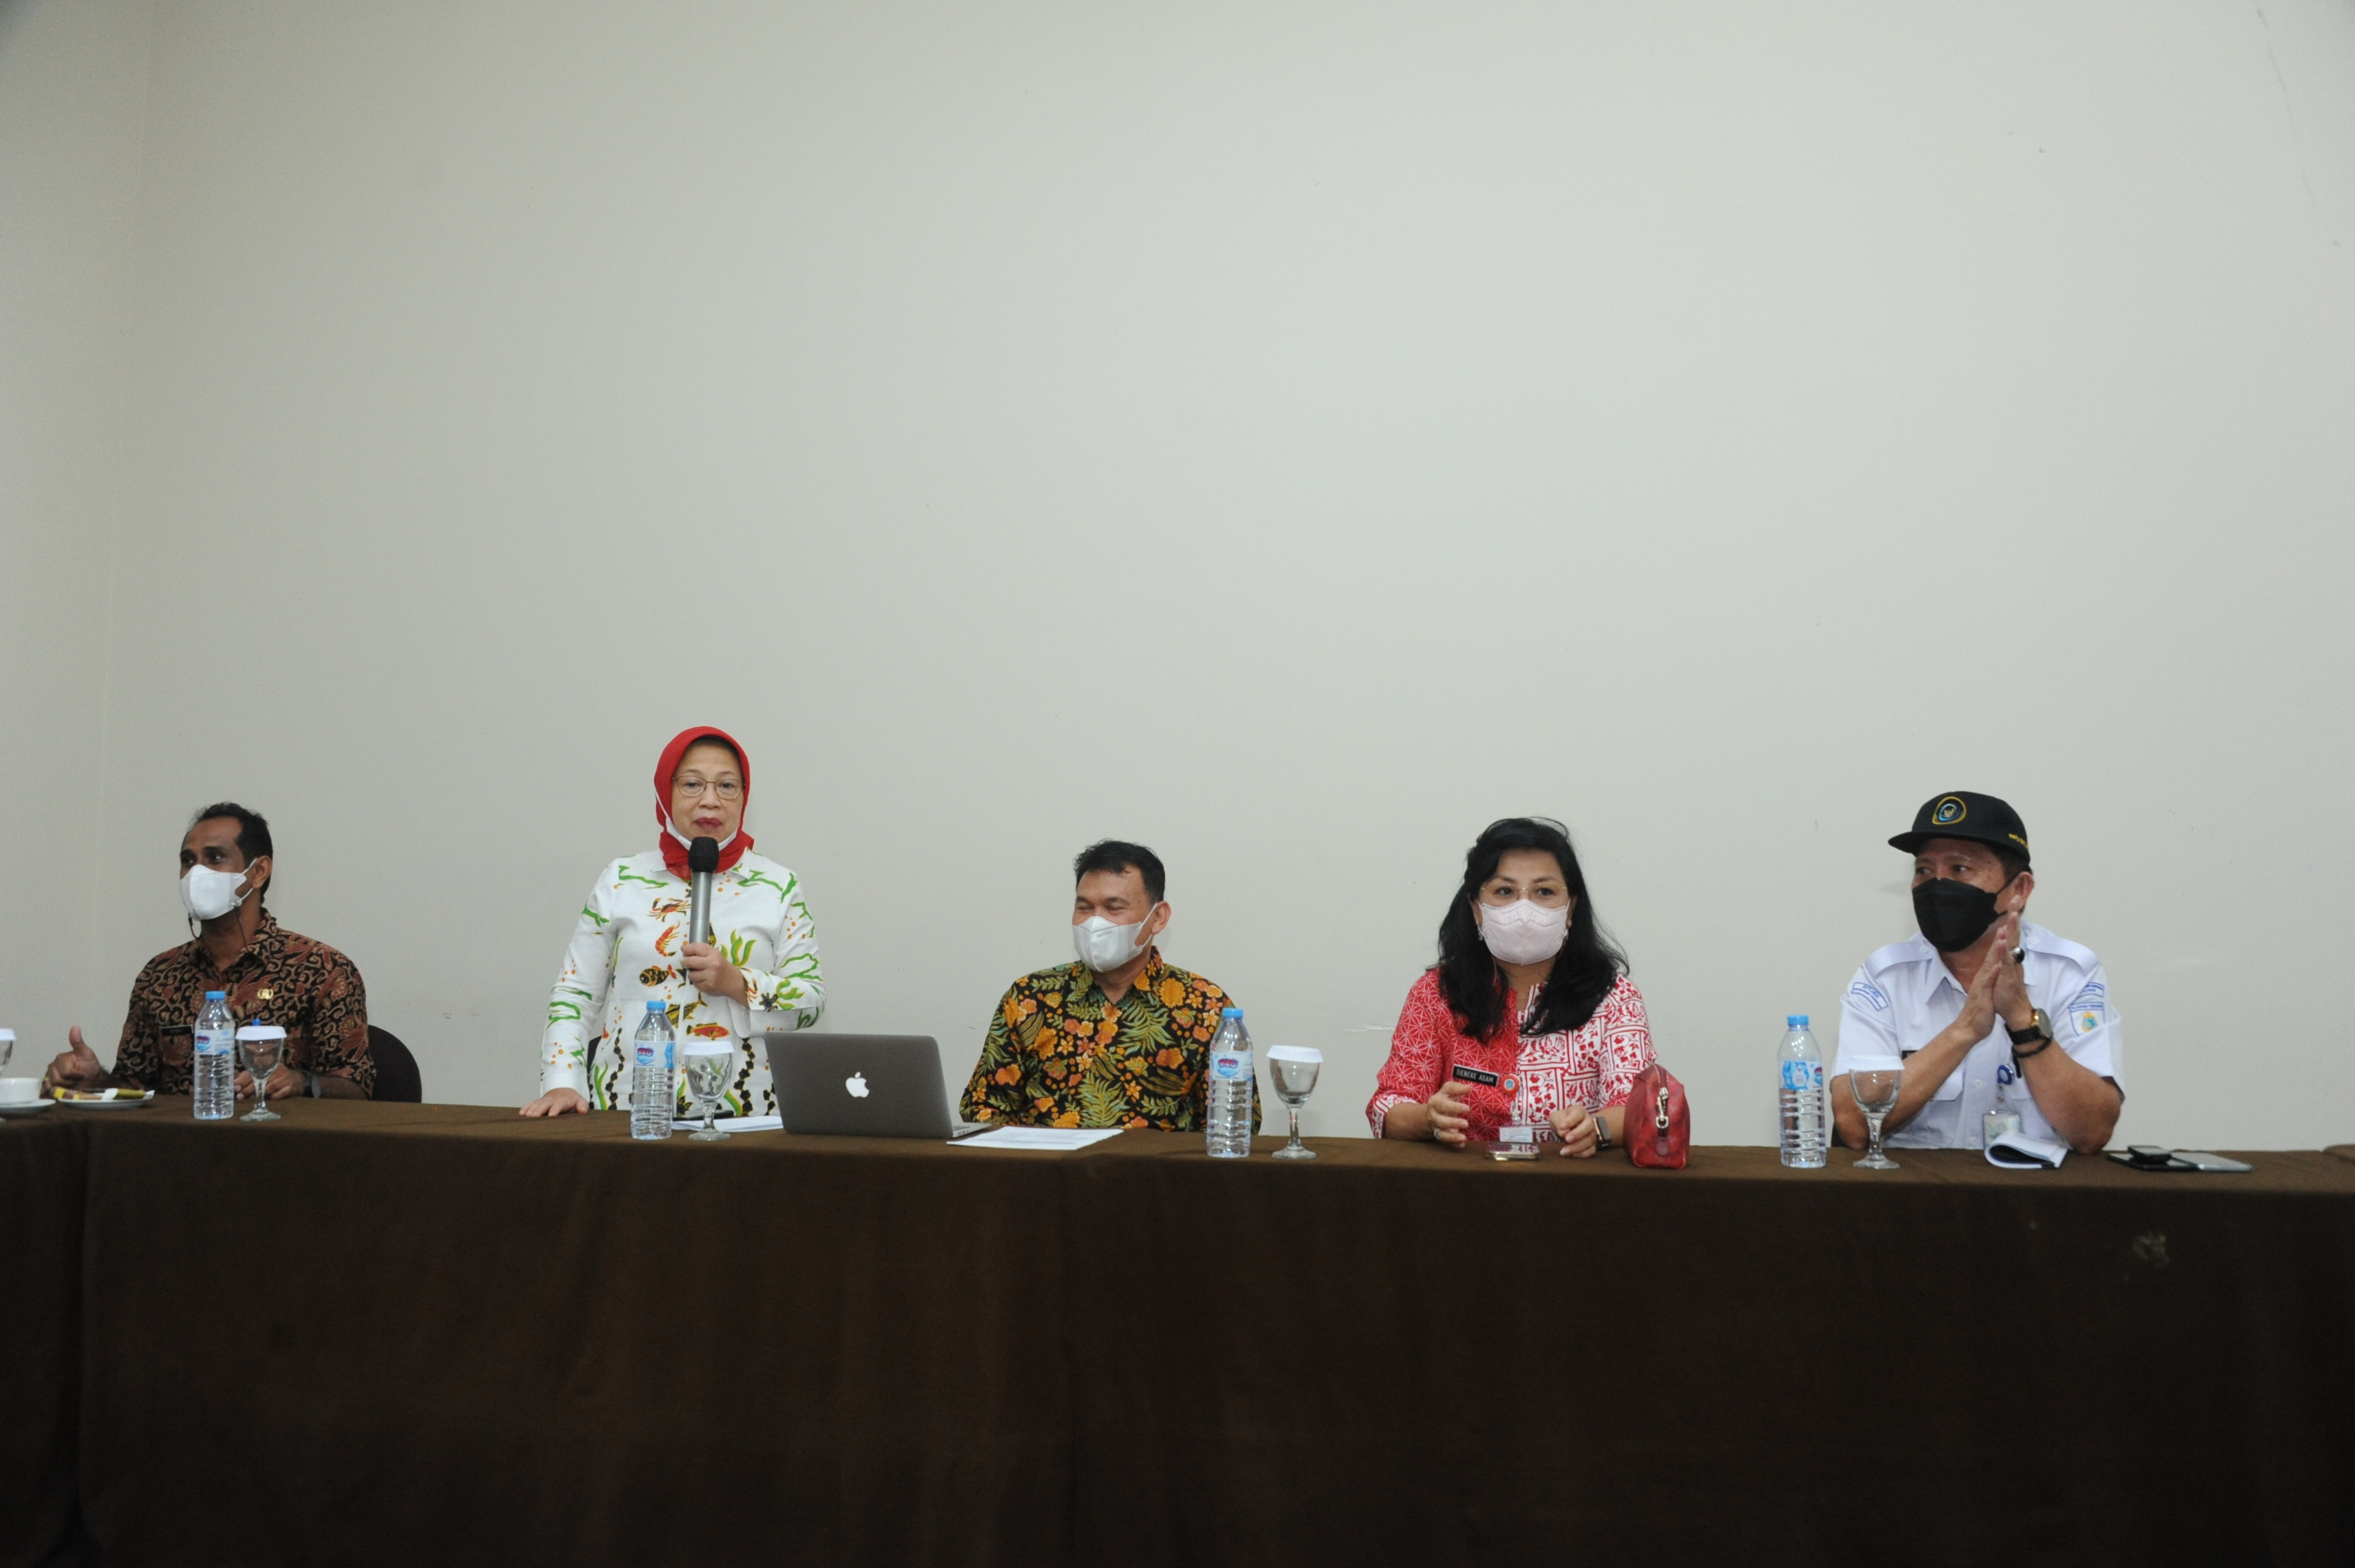 Sosialisasi dan Inisiasi Kelembagaan SRG dan FGD Tata Kelola Logistik Ikan di Kampung Nelayan Maju di Provinsi Sulawesi Utara